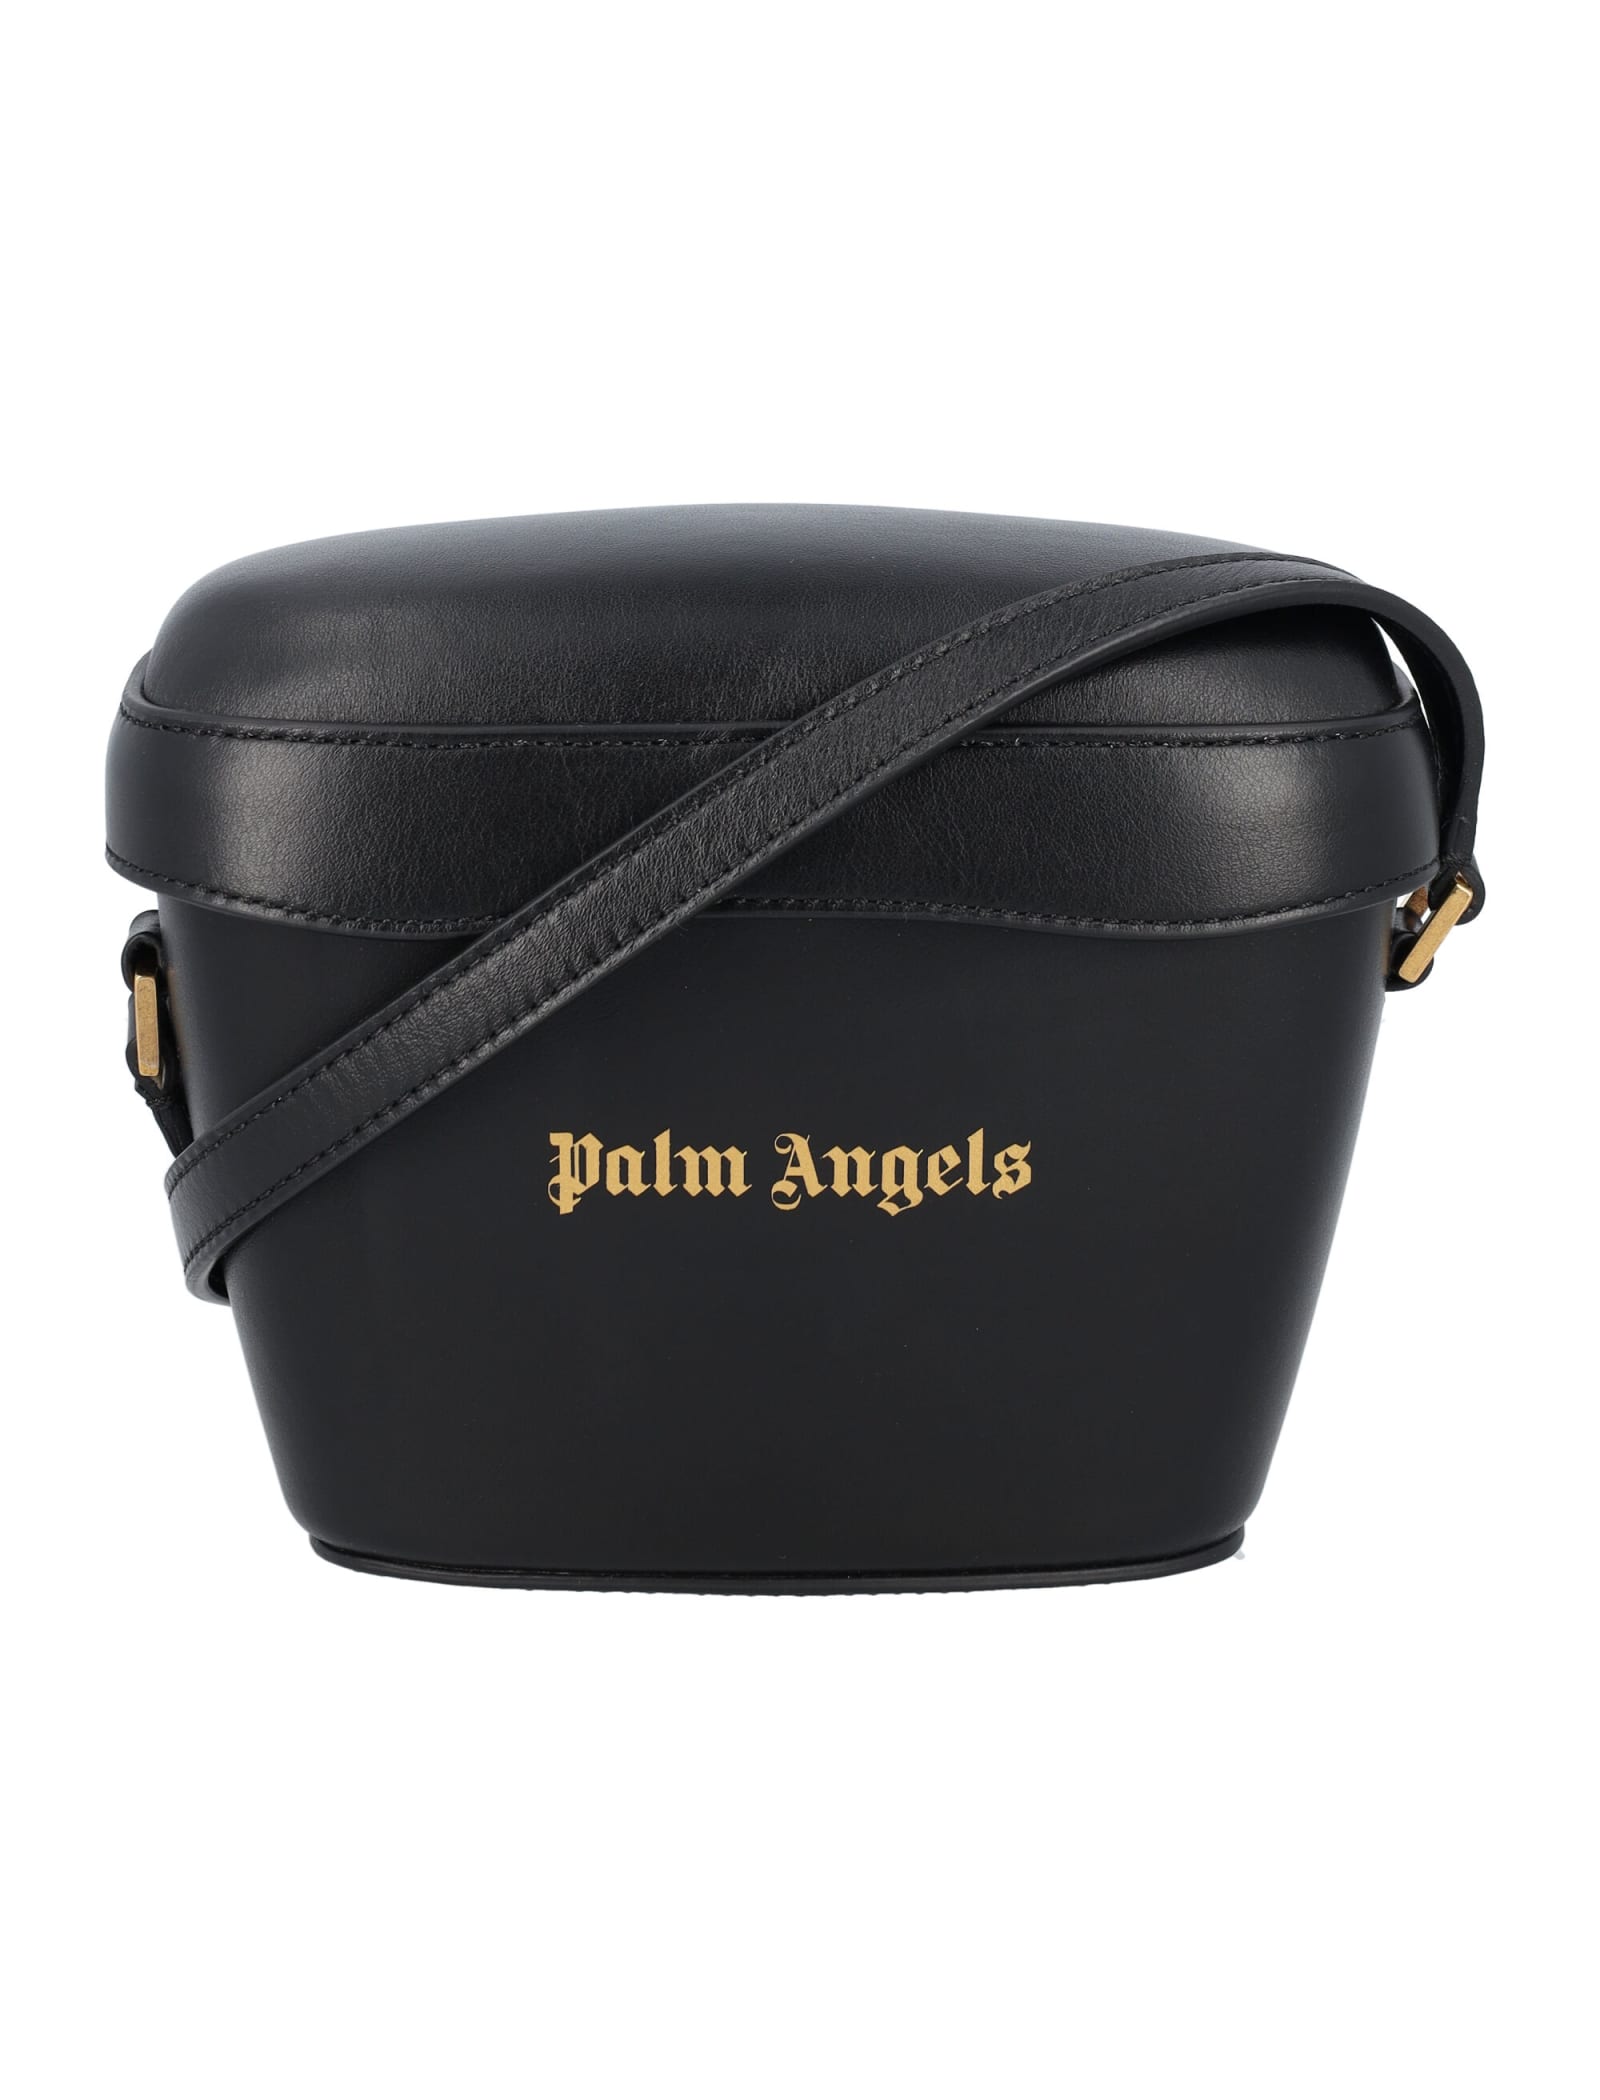 Palm Angels Padlock Bag